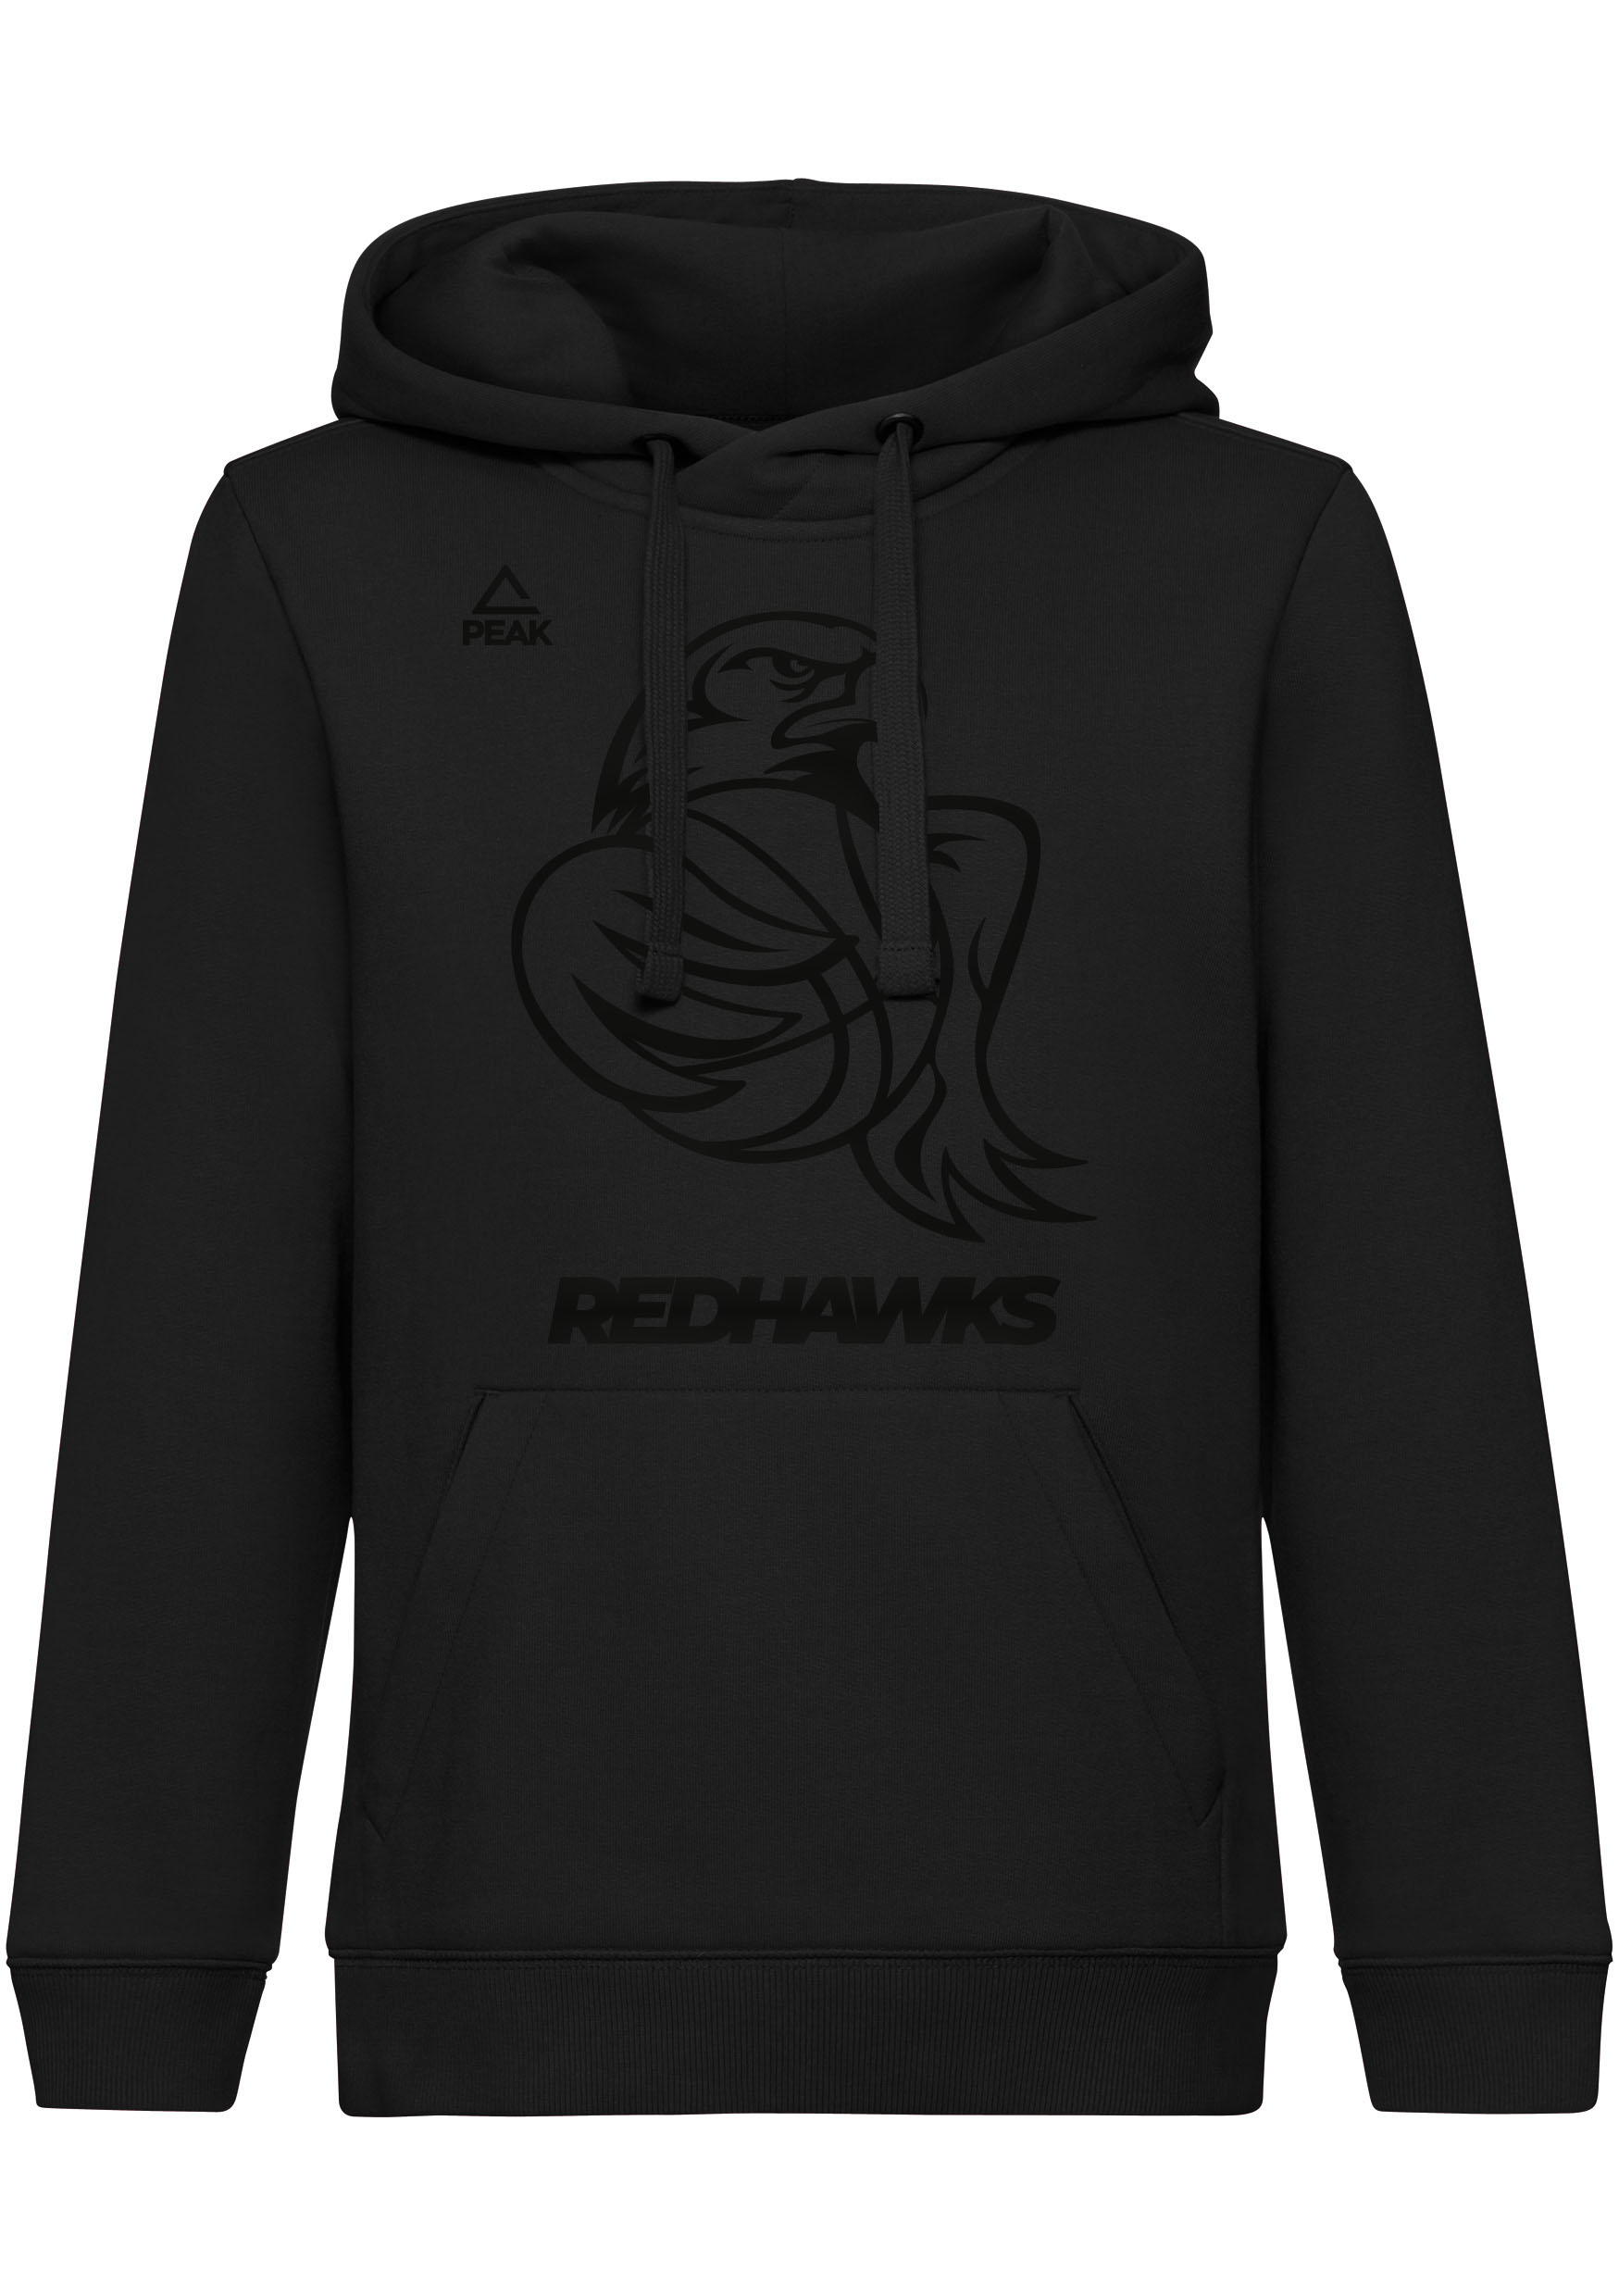 Red Hawks Hoodie Color Edition schwarz